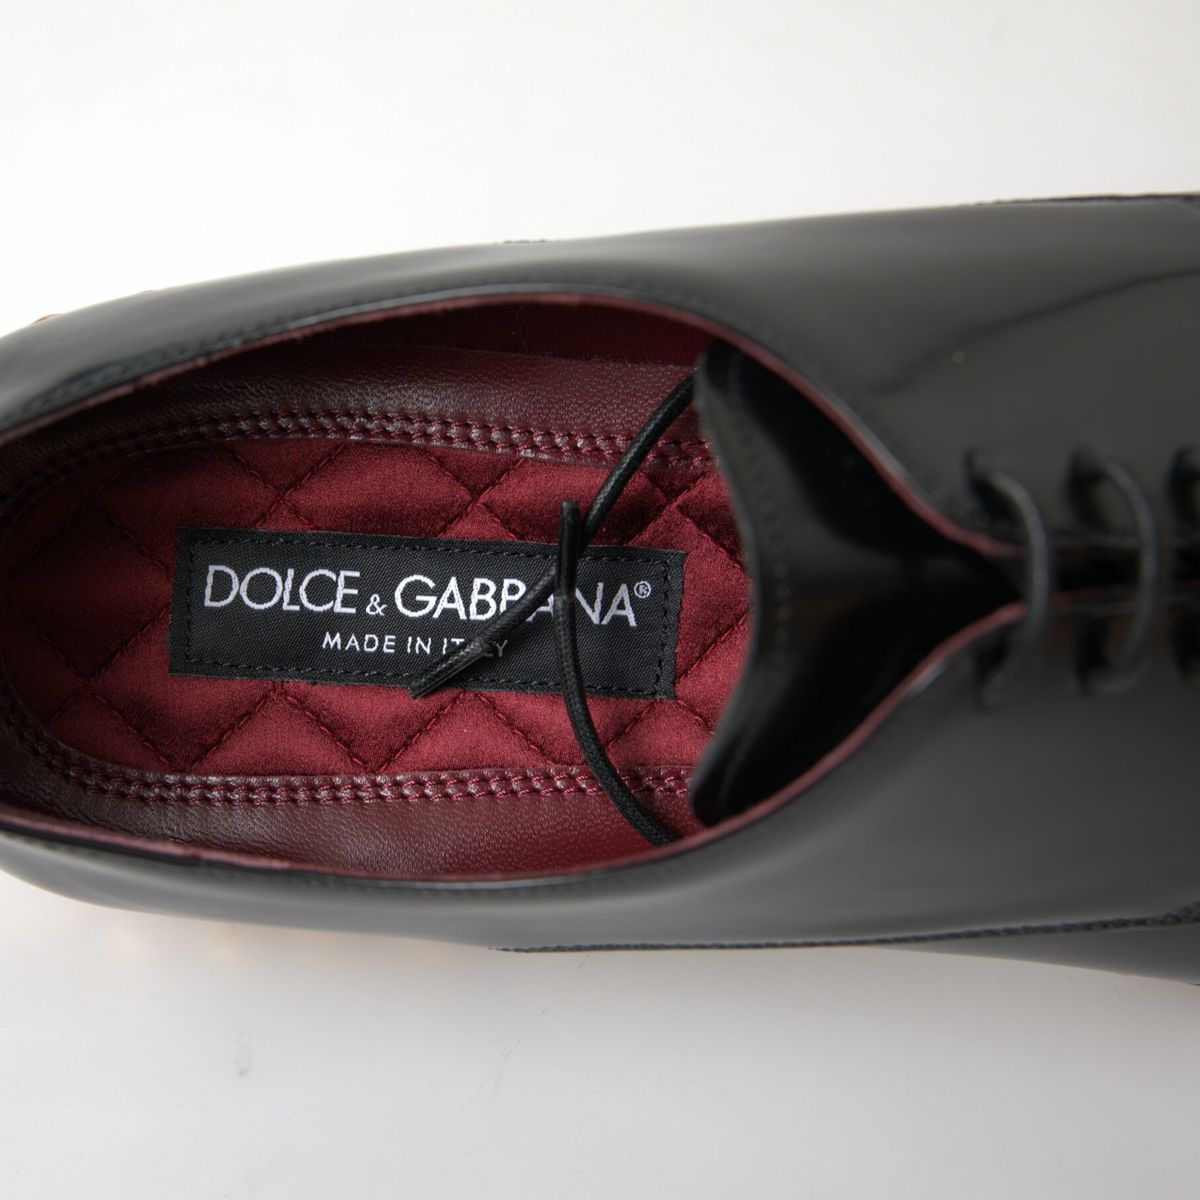 Dolce & Gabbana Elegant Gold-Accented Black Leather Dress Shoes